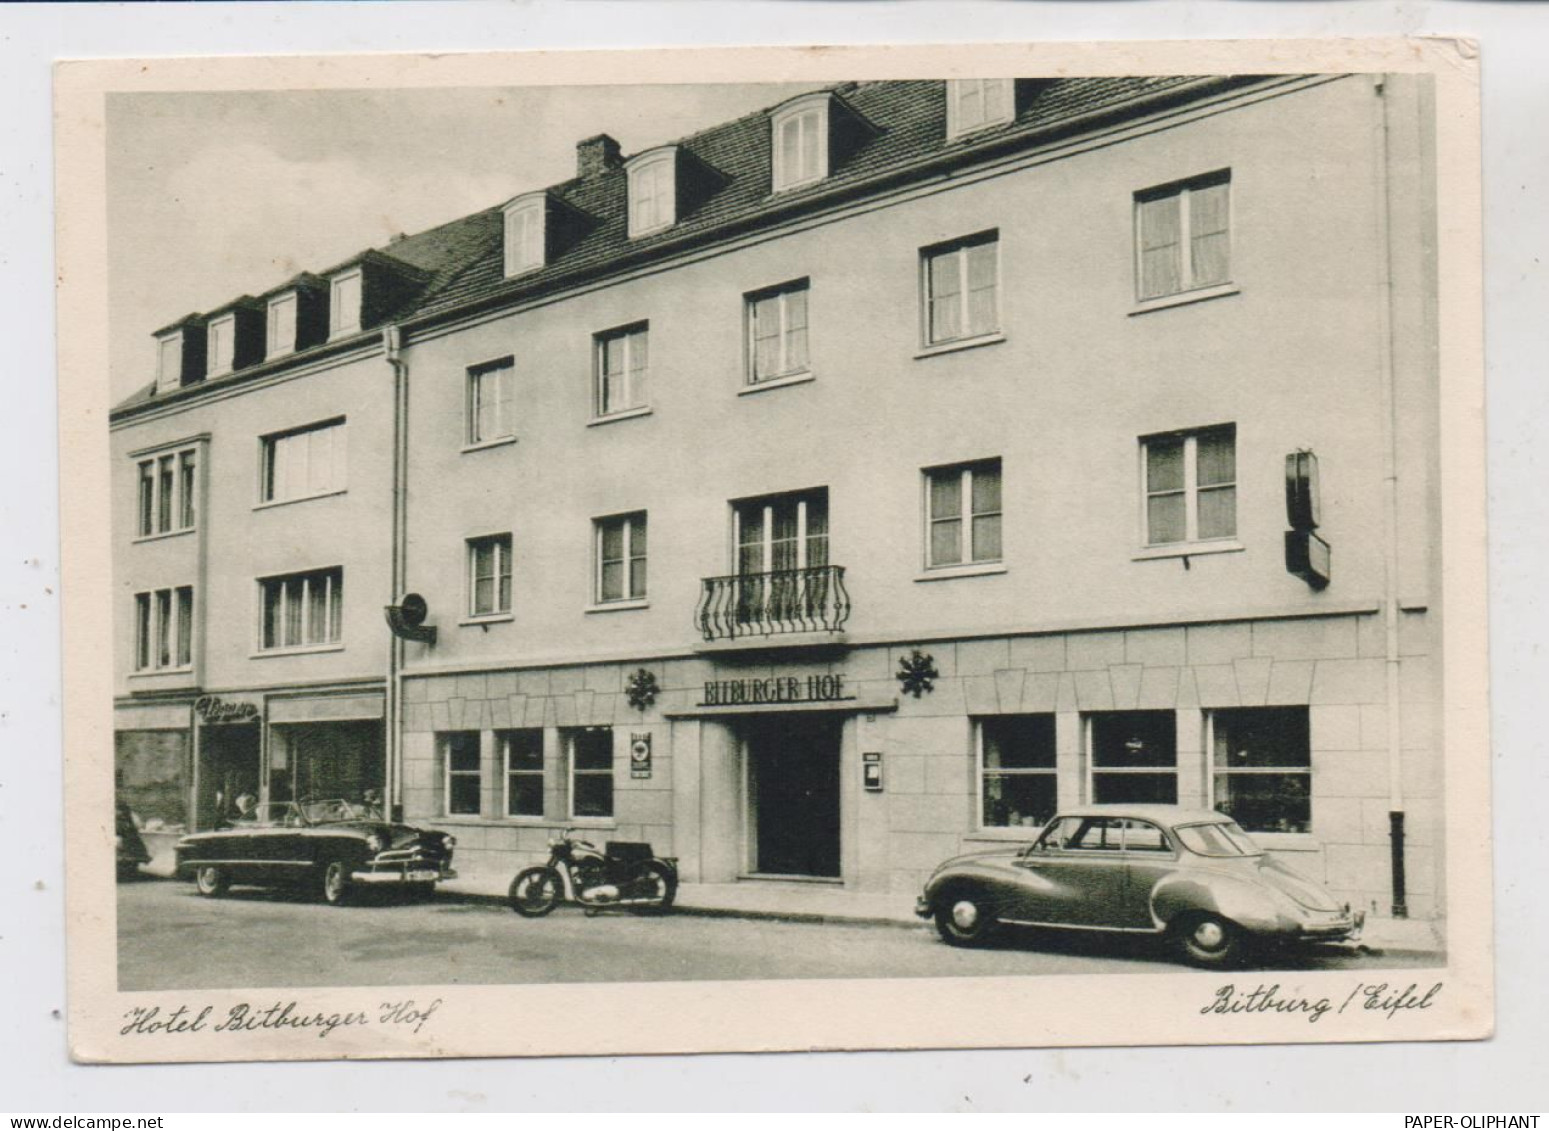 5520 BITBURG, Hotel Bitburger Hof, Wwe. Theodor Eiler, AUTO - UNION, Motorrad - Bitburg